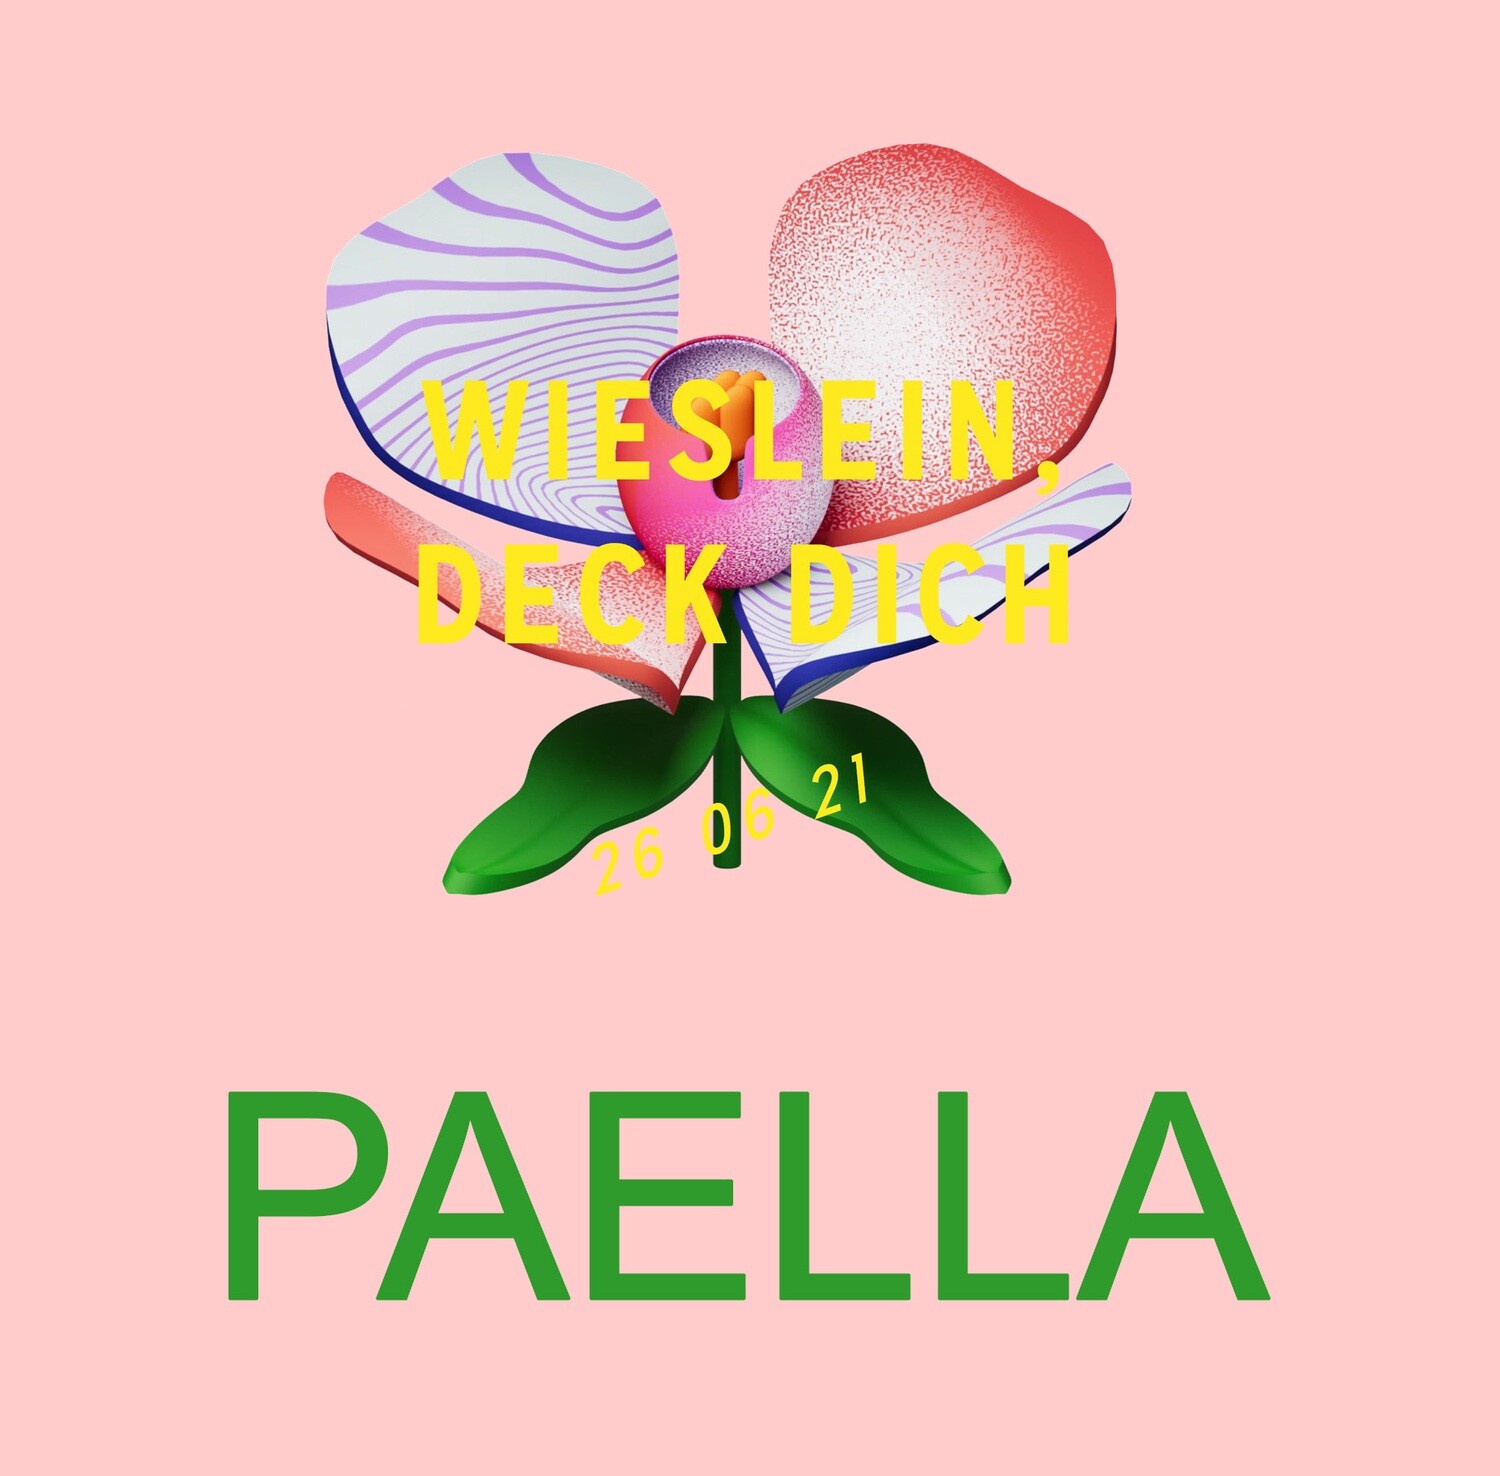 Paella - Wieslein,deck Dich